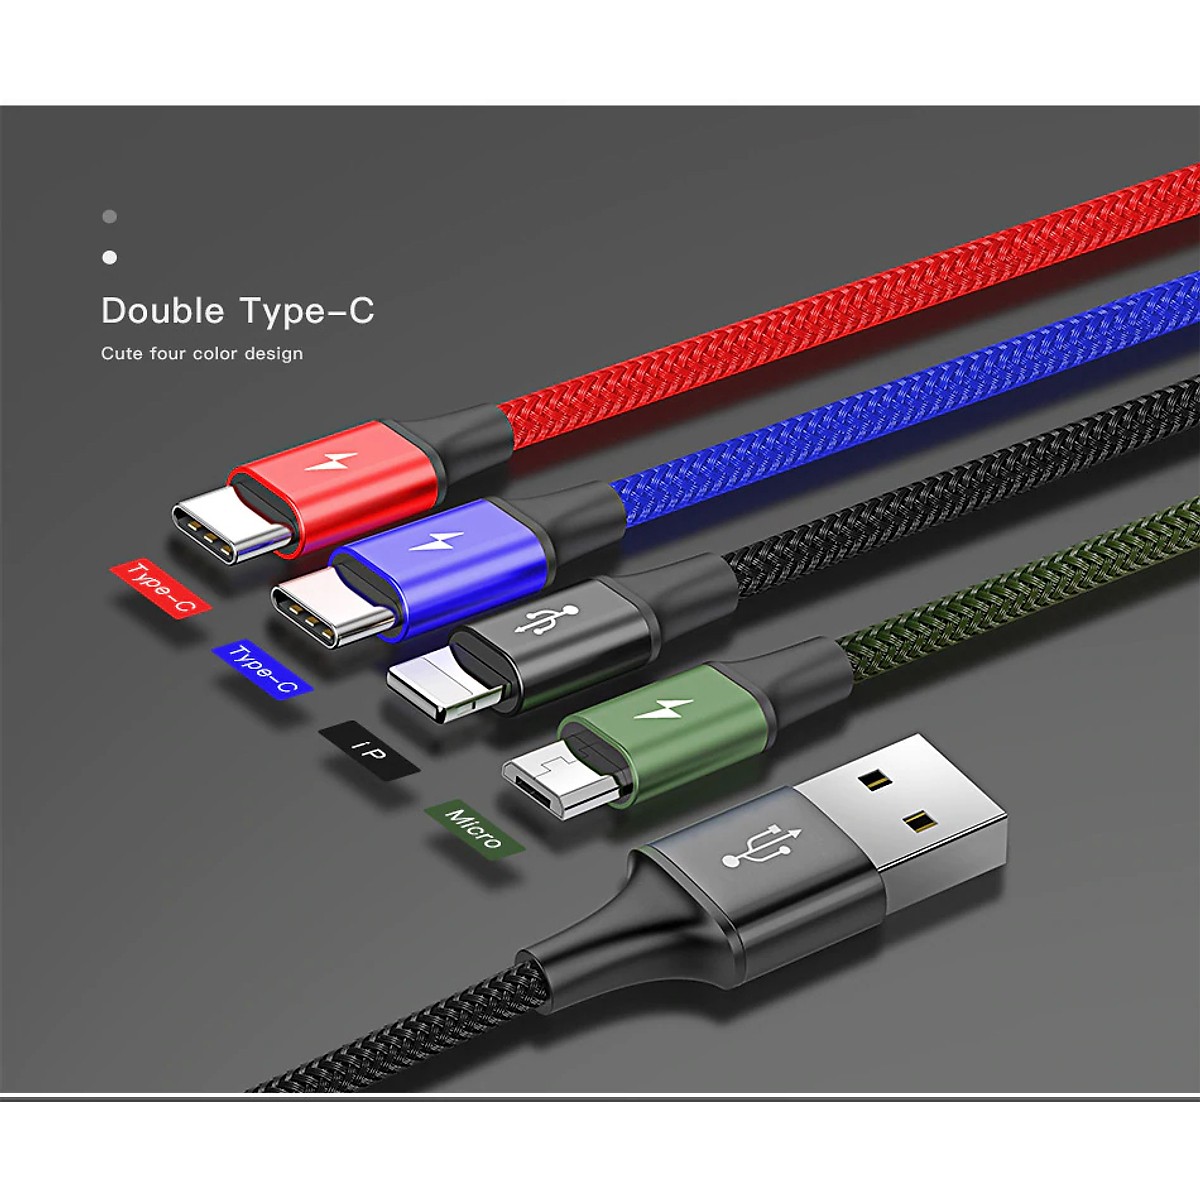 Cáp sạc đa năng Baseus Rapid Series 4 in1 2 Type-C, Lightning, Micro USB cho iPhone/ iPad, Smartphone &amp; Tablet Android (3.5A, 1.2M, Fast charge 4 in 1 Cable) - Hàng chính hãng